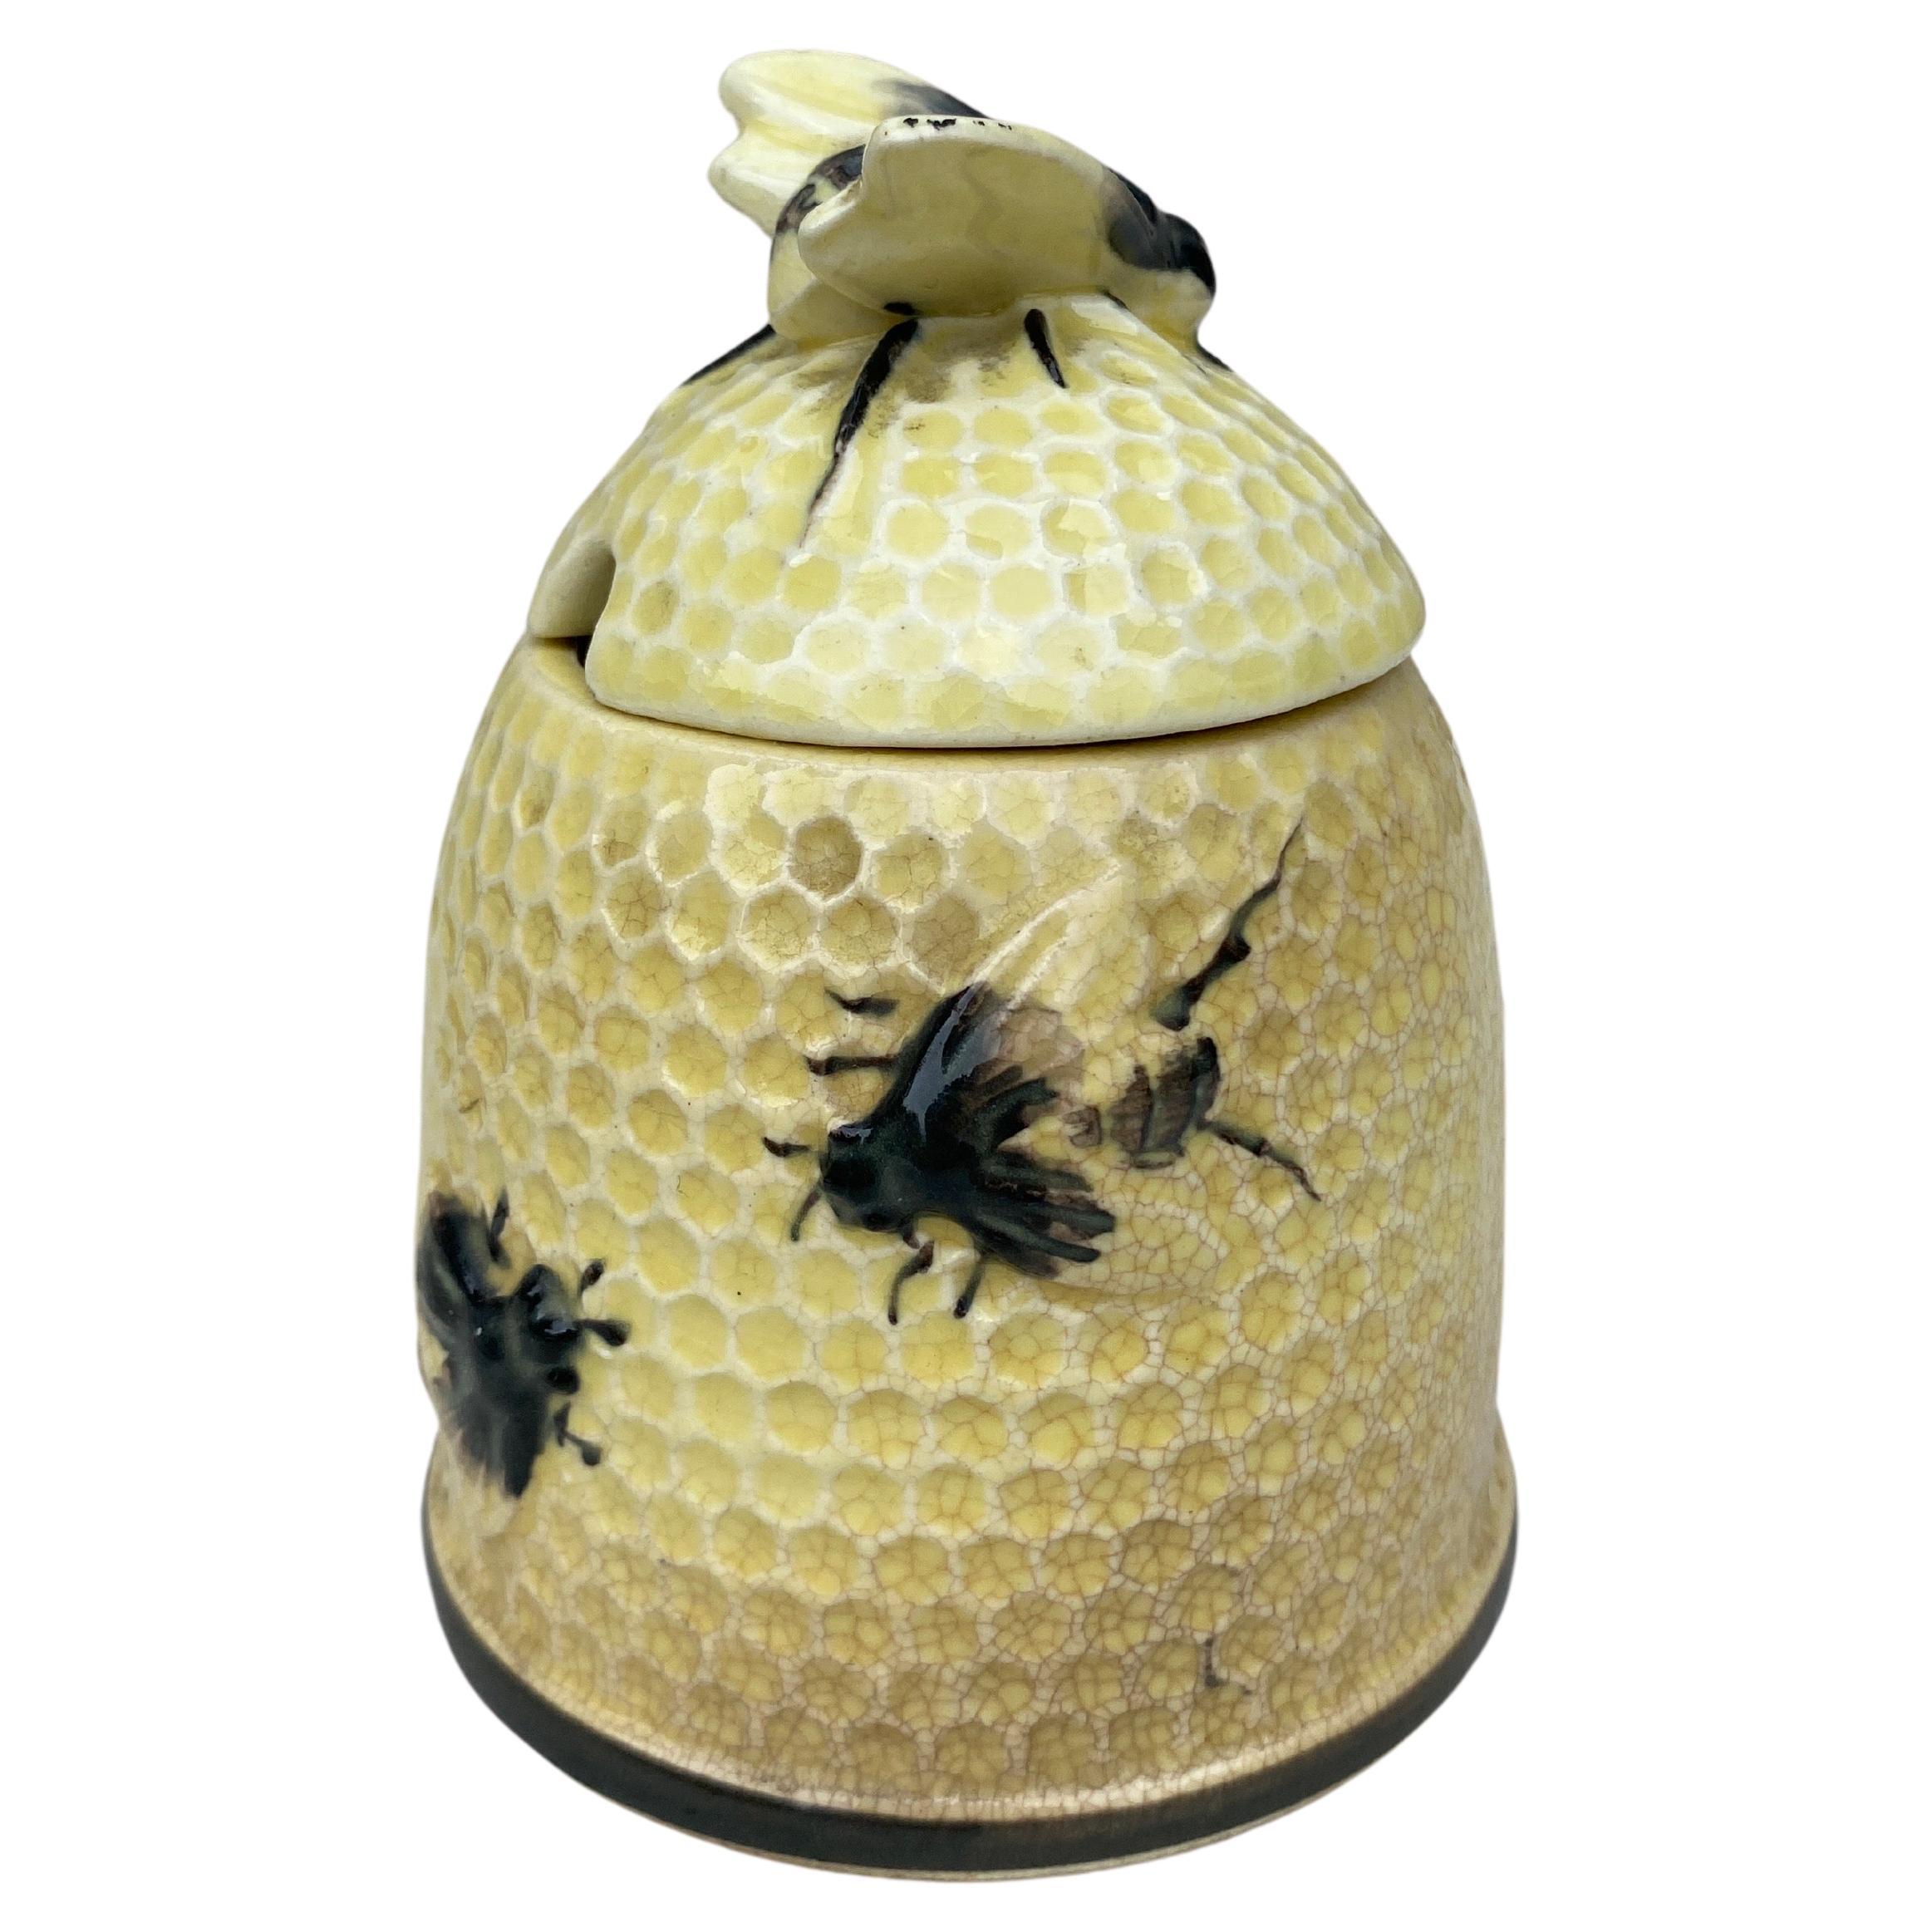 French Majolica beehive honey pot circa 1930.
